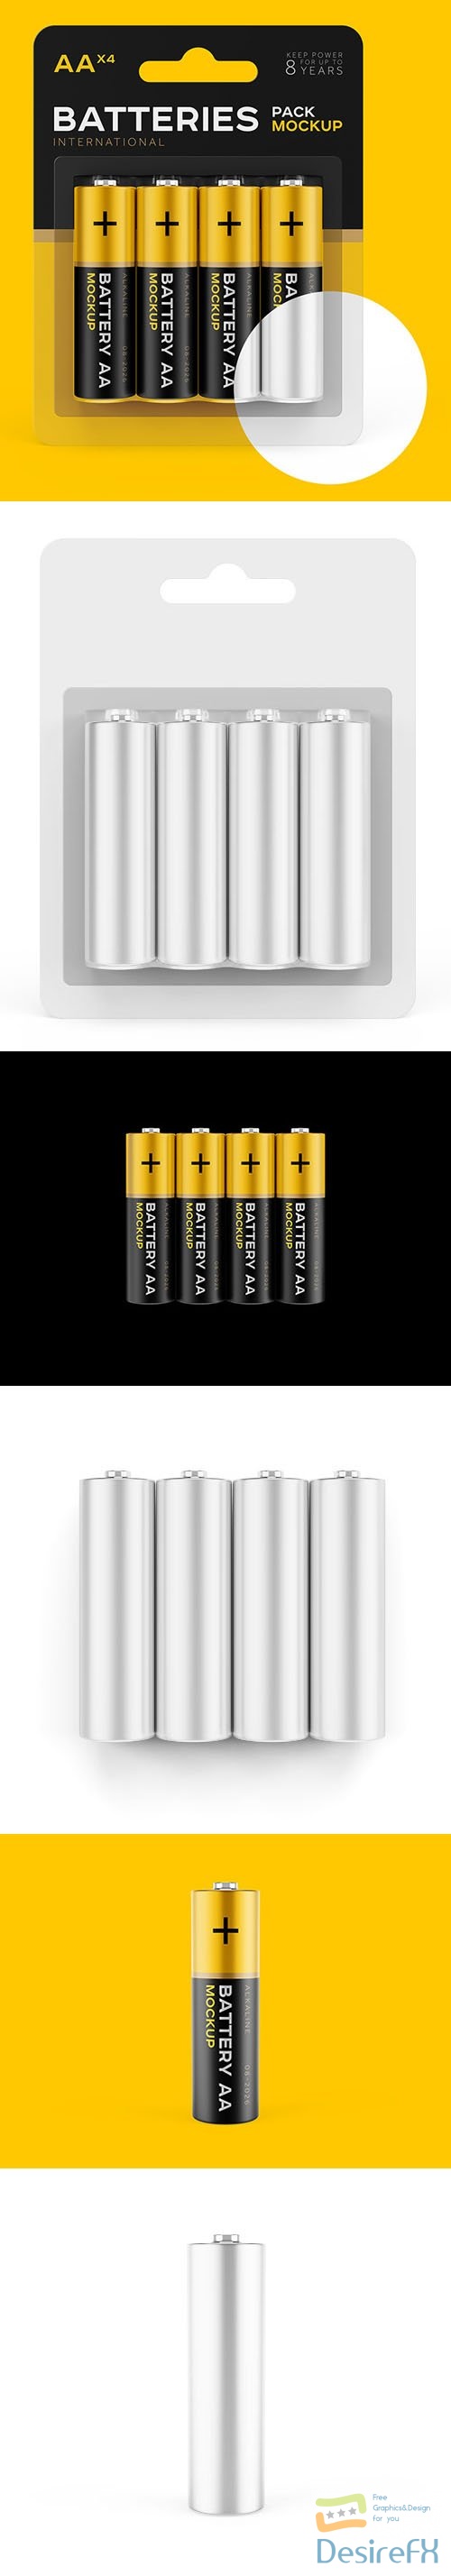 AAx4 Batteries Pack PSD Mockups Templates